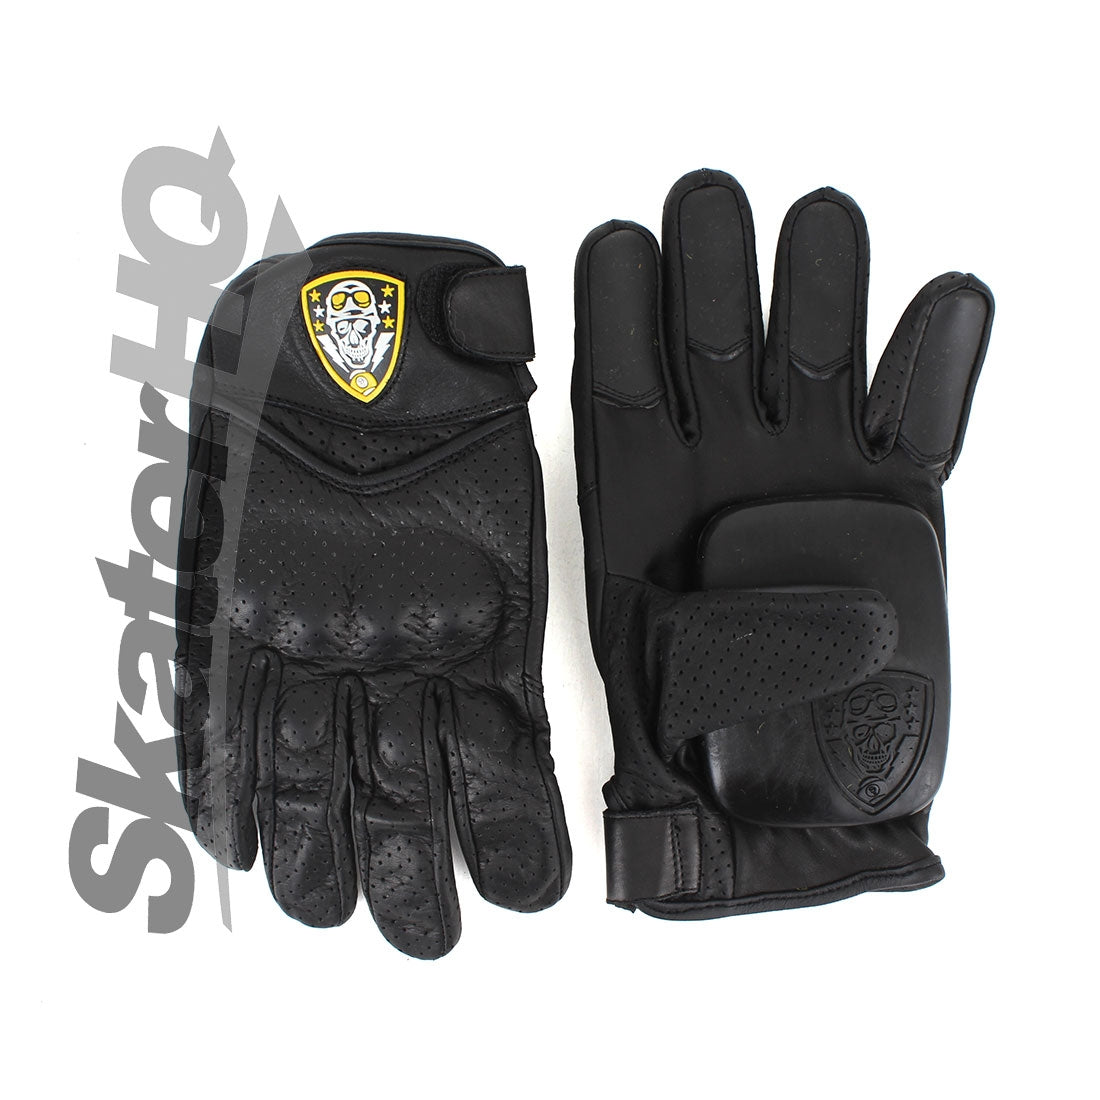 Sector 9 Lightning Glove - L/XL Protective Gear